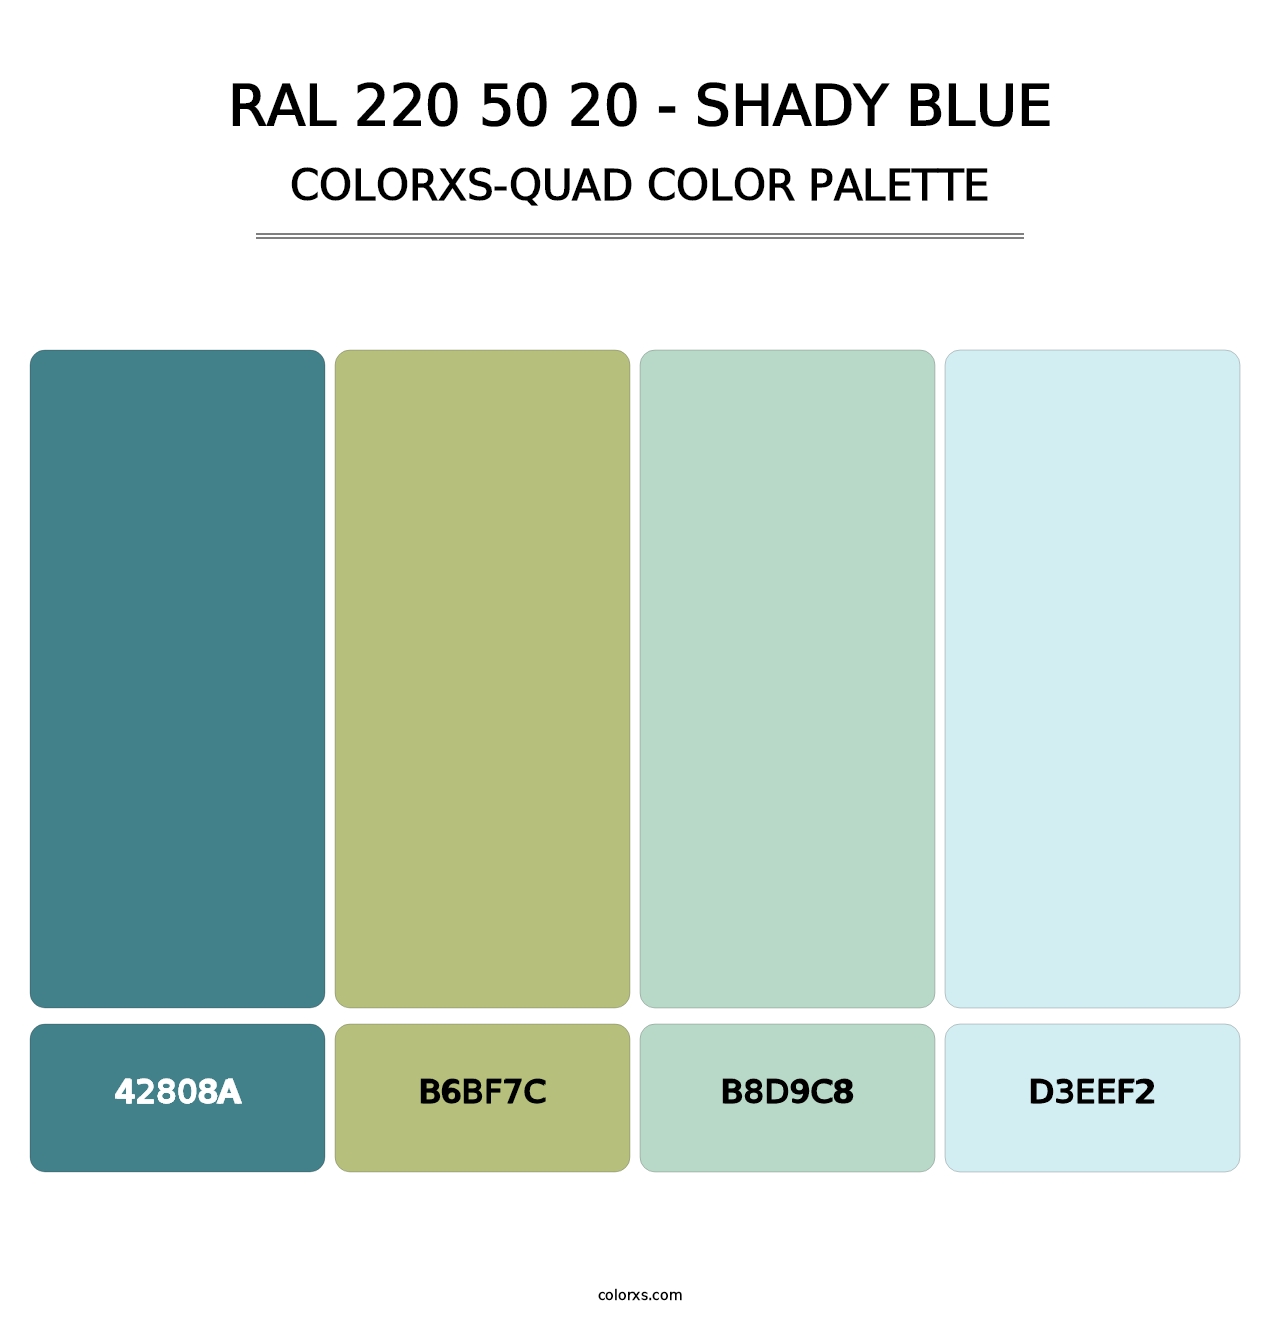 RAL 220 50 20 - Shady Blue - Colorxs Quad Palette